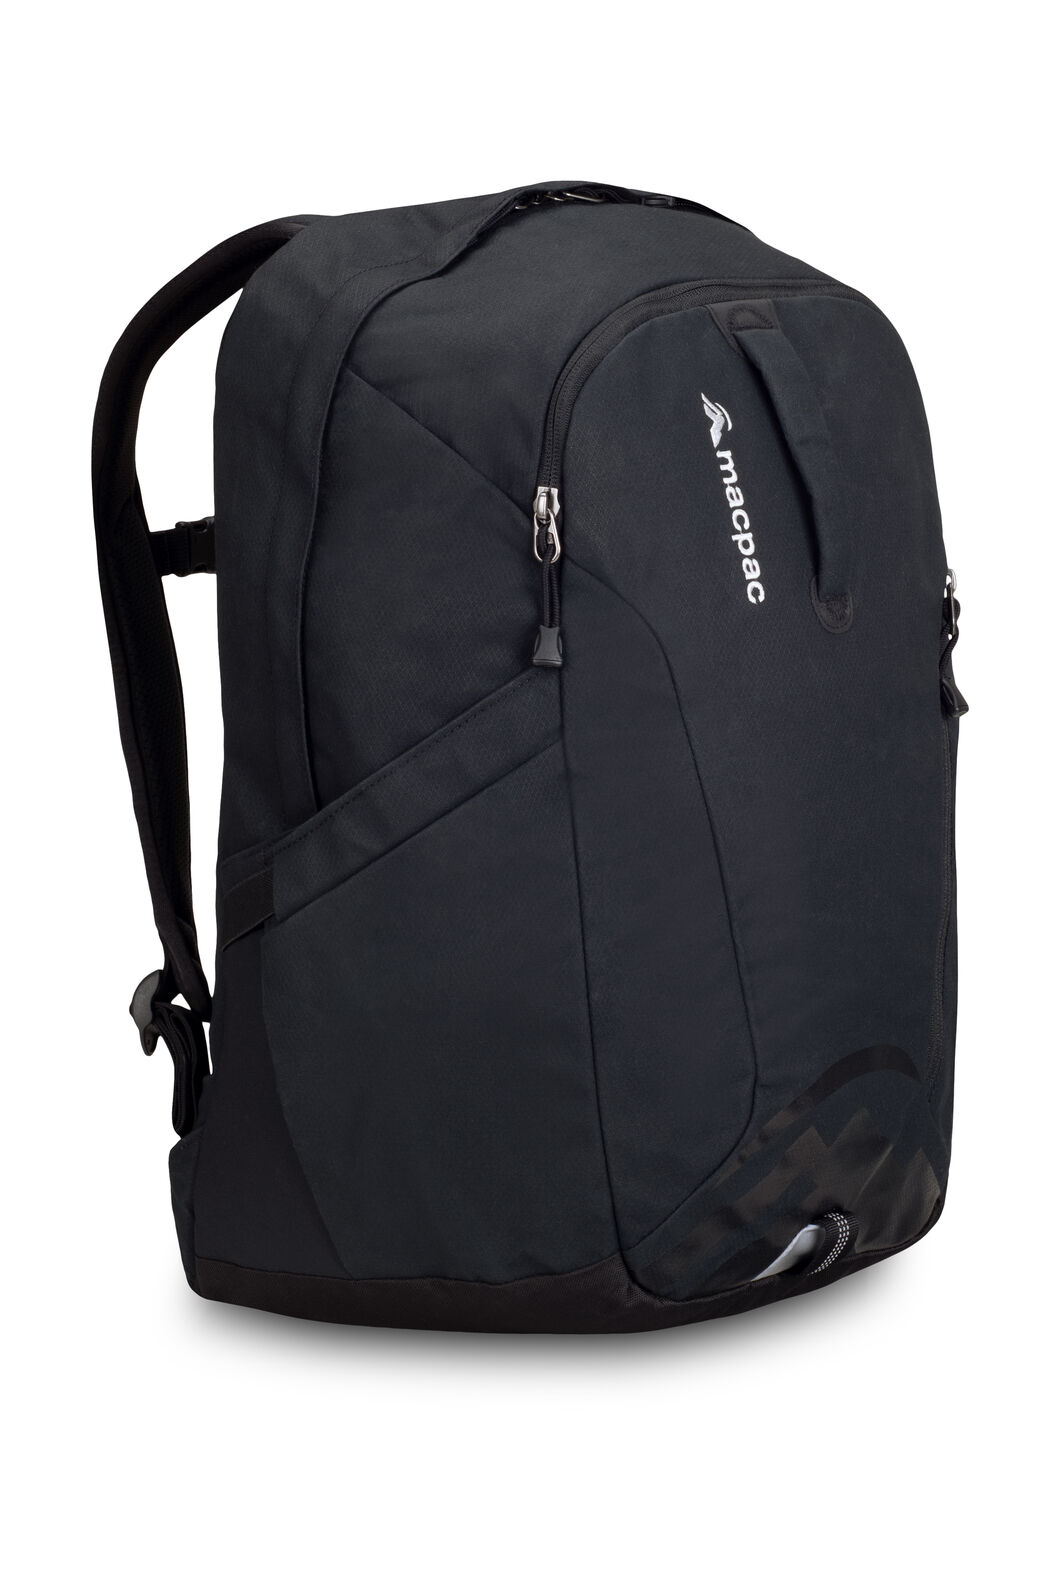 Macpac Atlas 24L AzTec® Backpack | Macpac